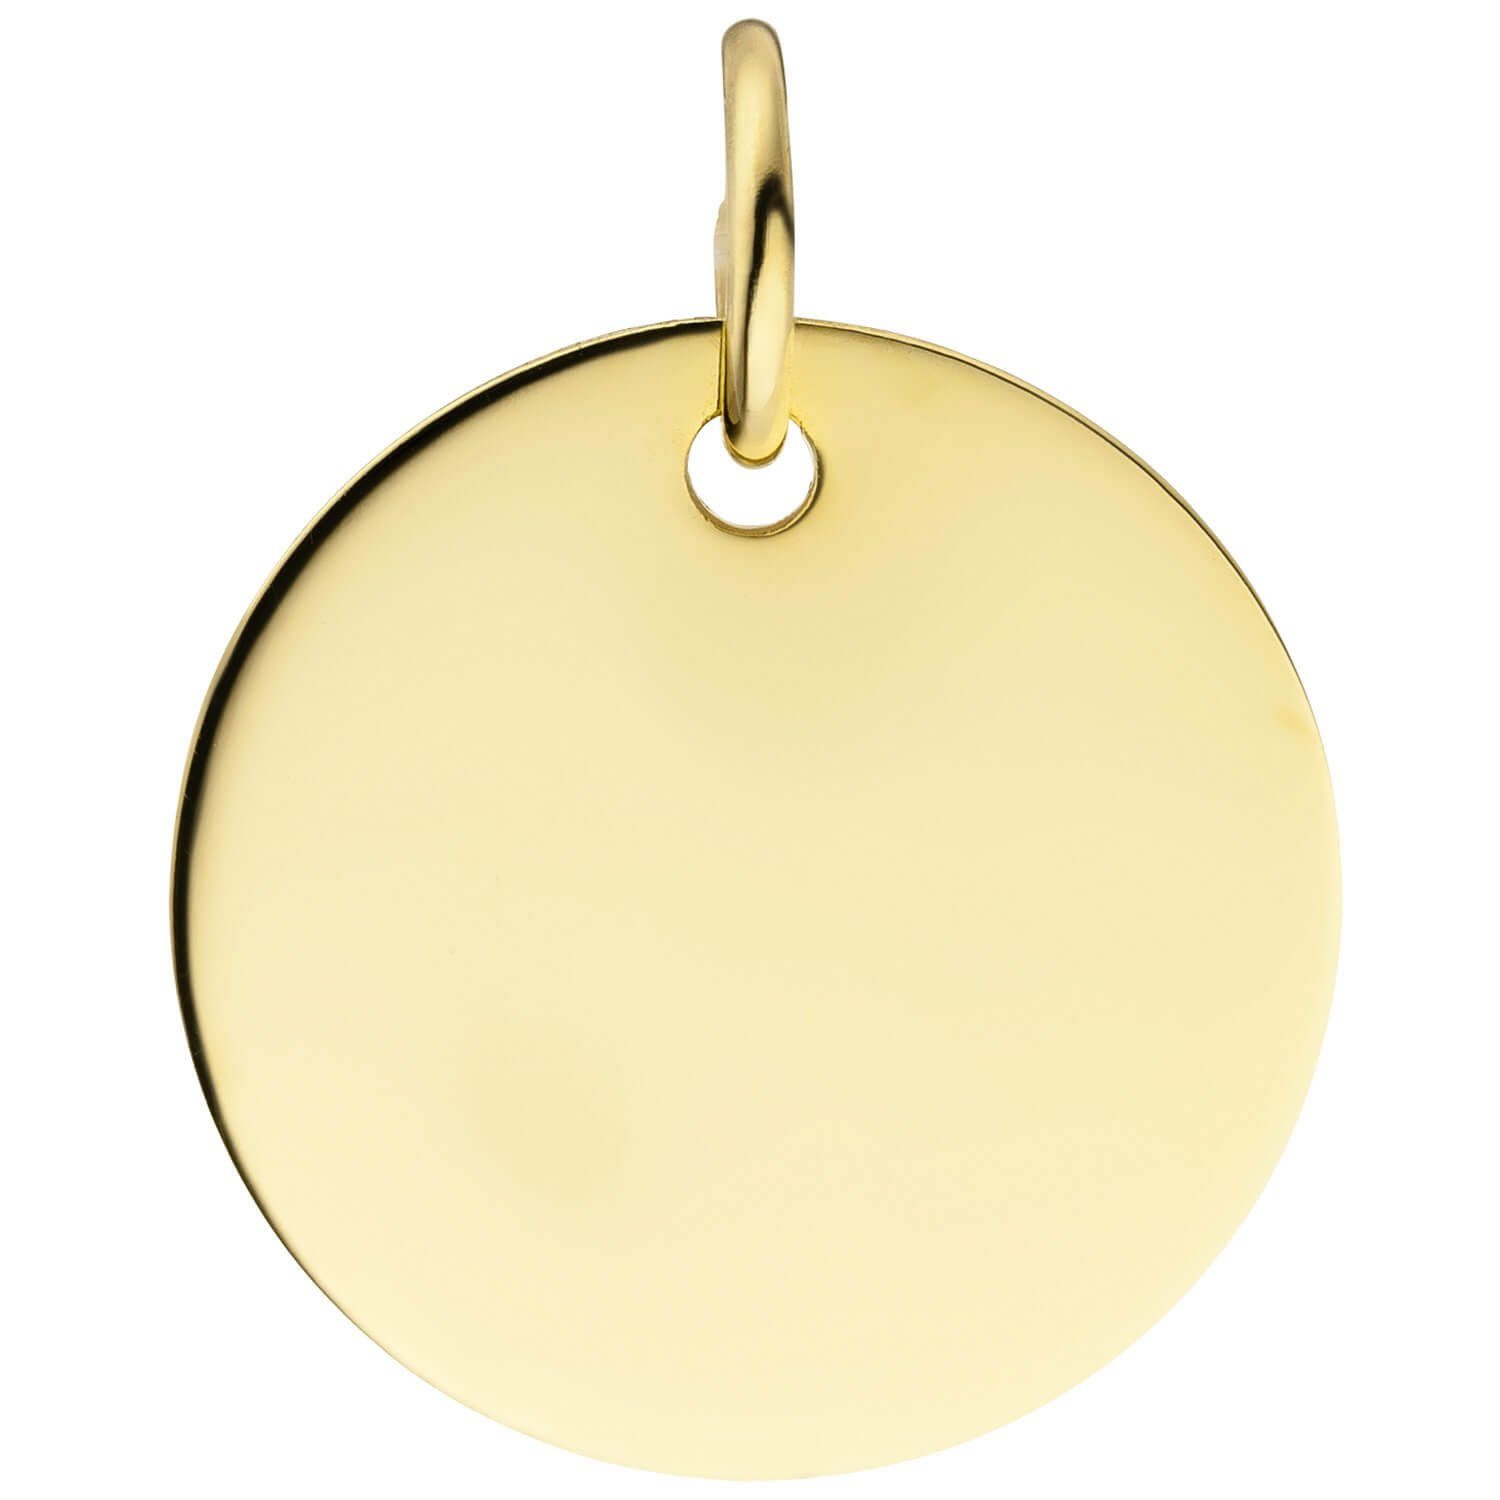 Schmuck Krone Kettenanhänger Anhänger Gravur Gravurplatte Goldanhänger 14mm Kreis aus 585 Gold Gelbgold, Gold 585